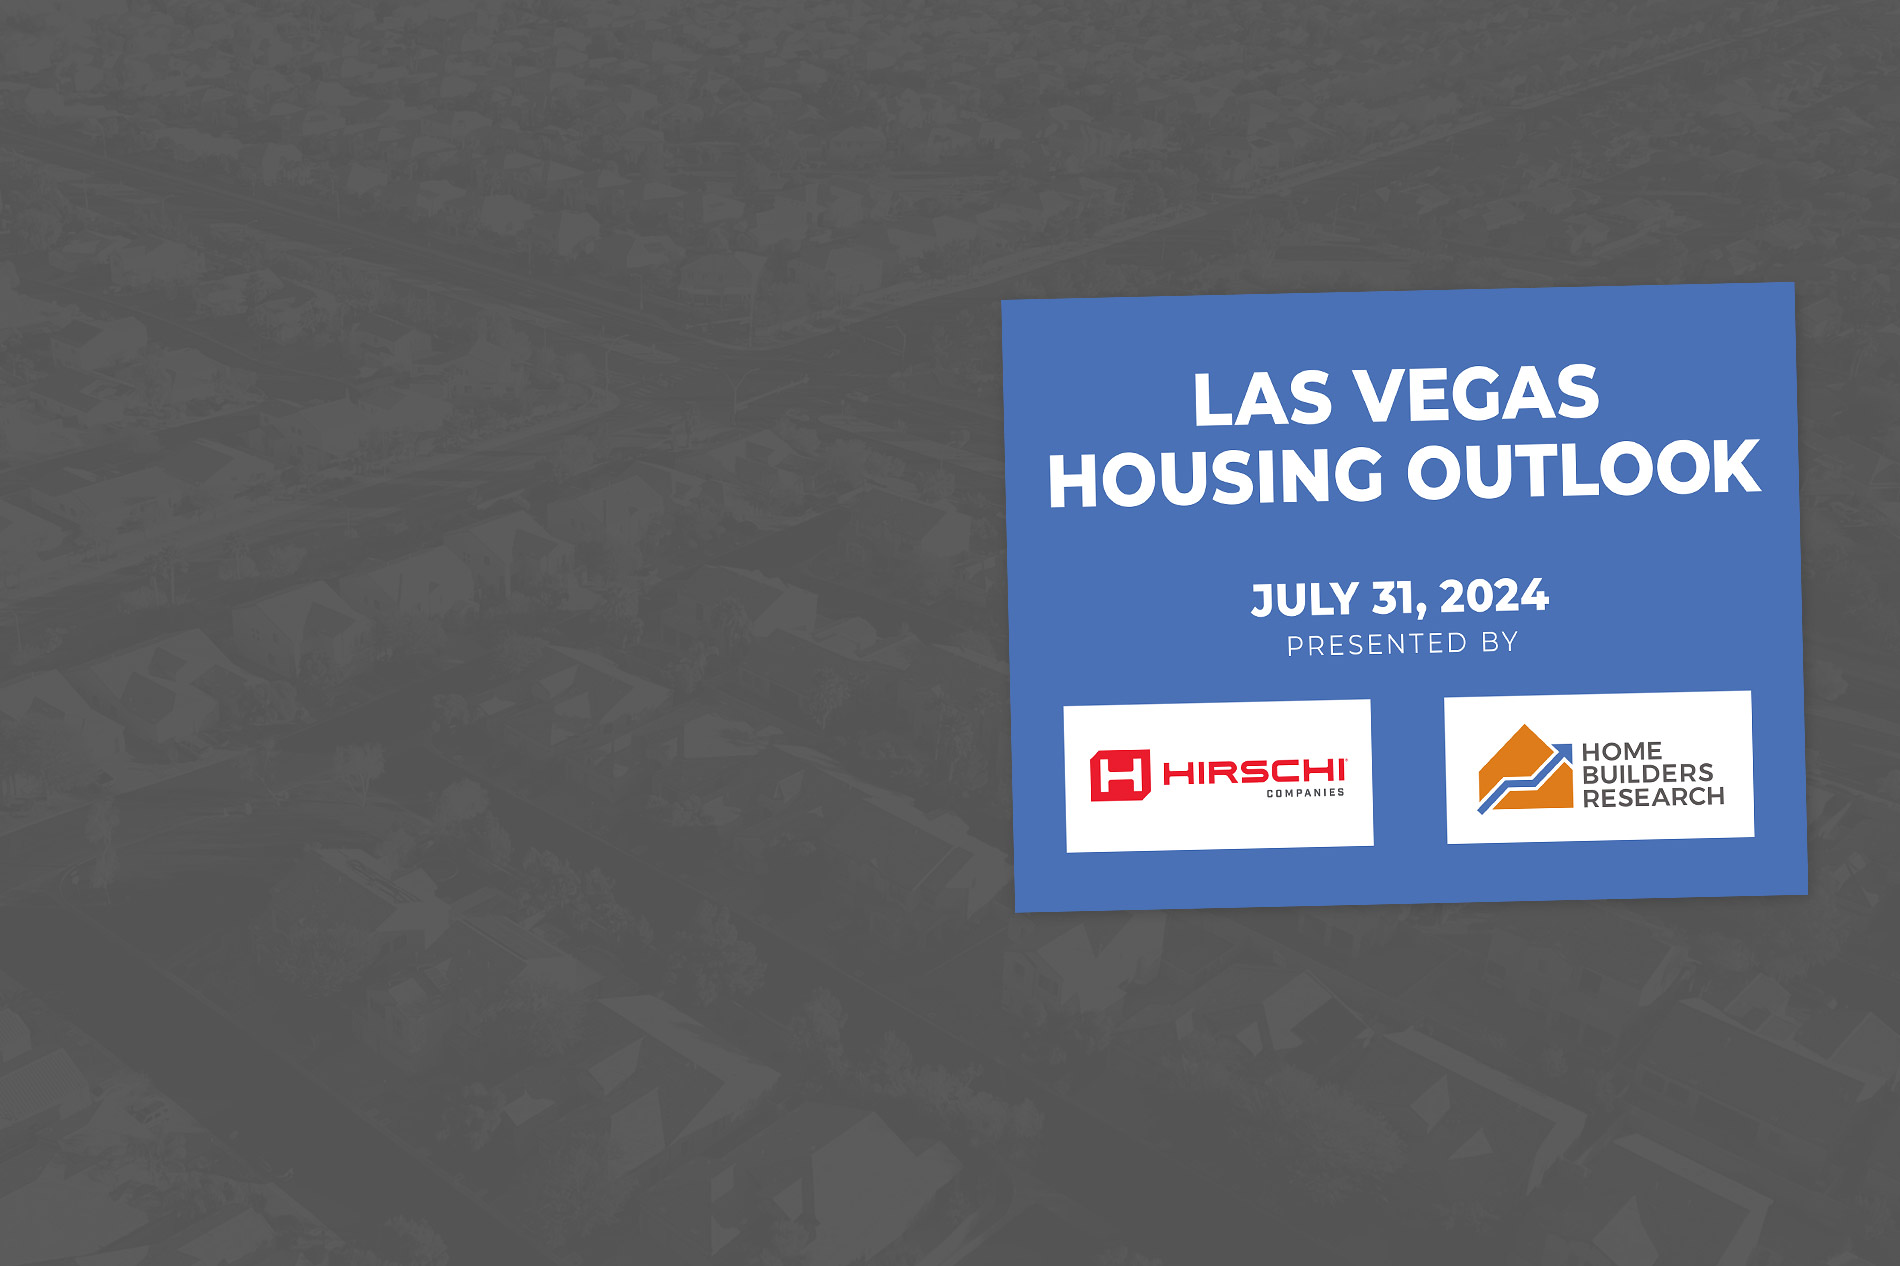 Las Vegas Housing Outlook